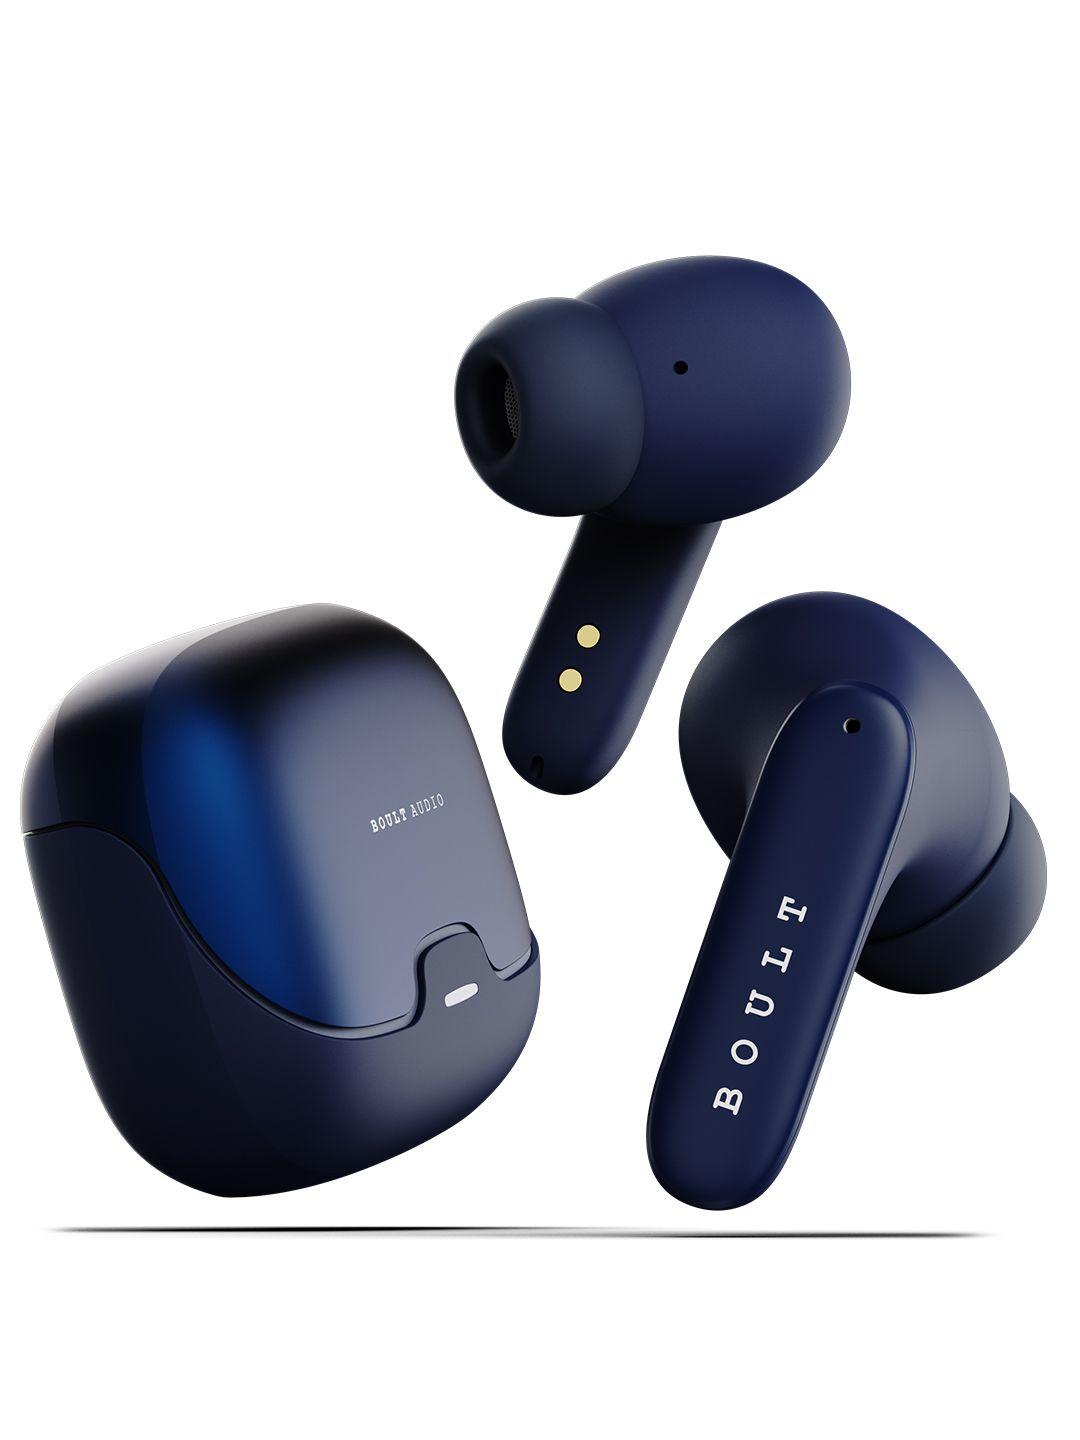 boult audio airbass z40 with zen enc mic & 60h playtime wireless earphones